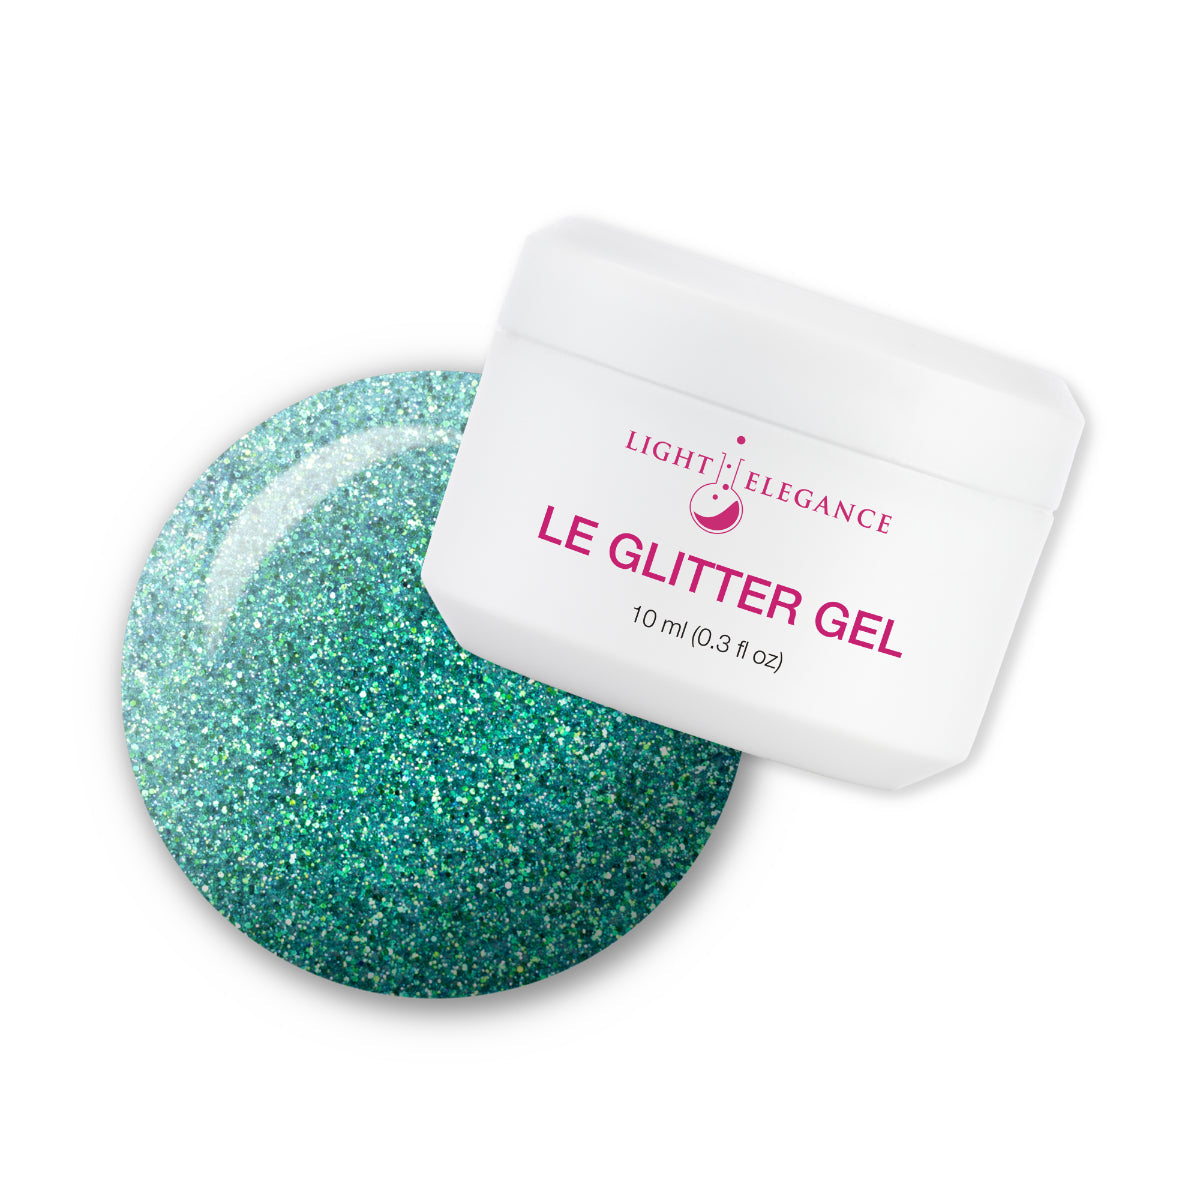 Light Elegance Glitter Gel - Standing Ovation :: New Packaging